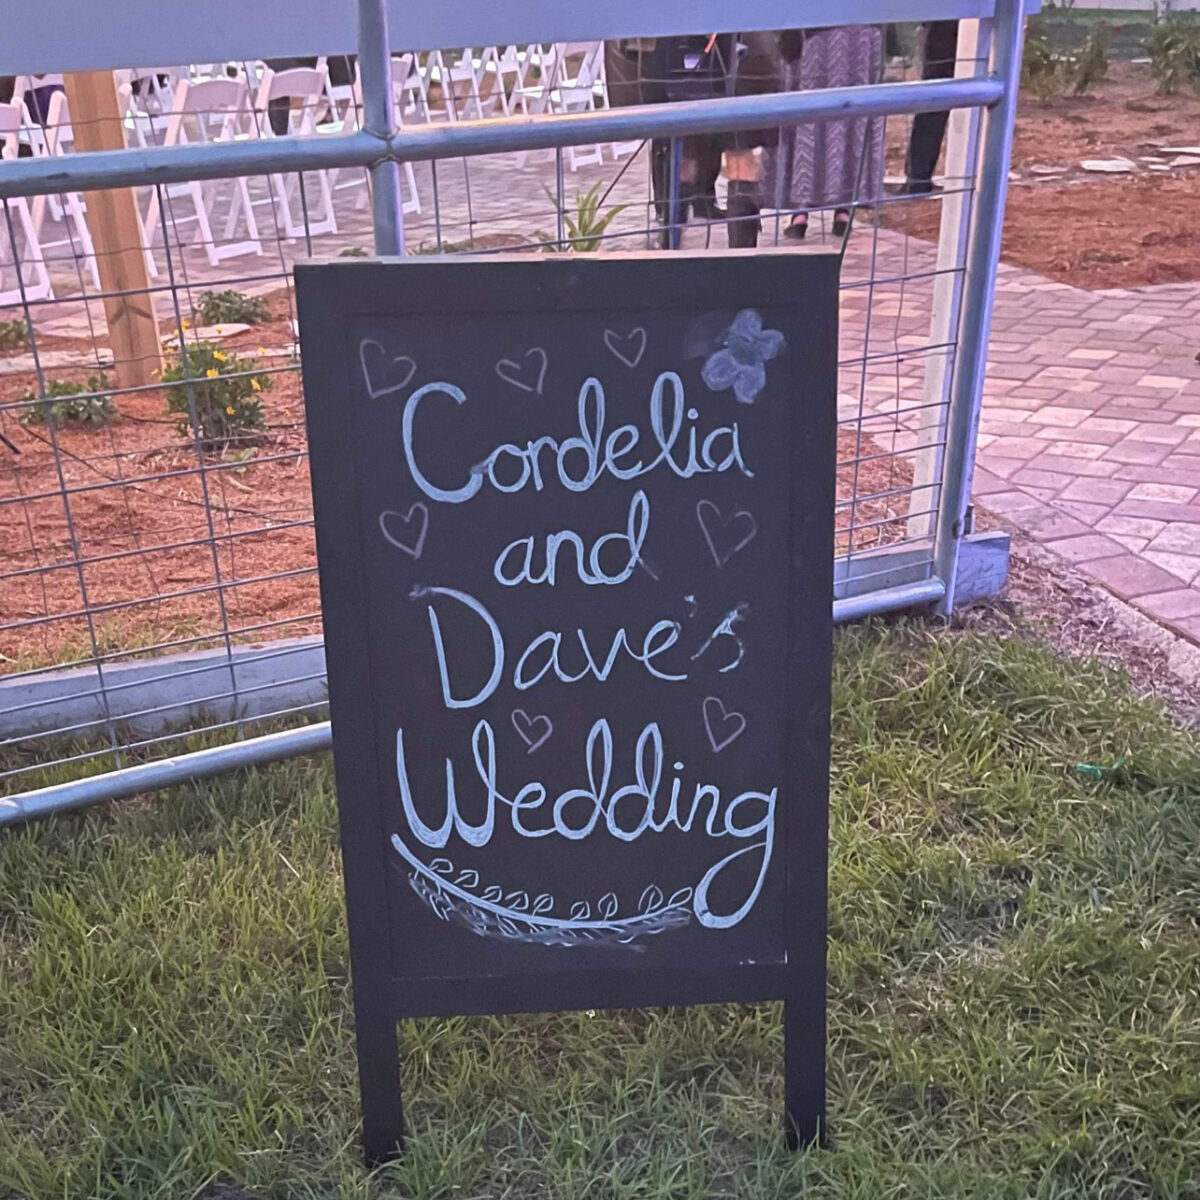 Cordelia and Dave's wedding sign at Rapragar Family Farms